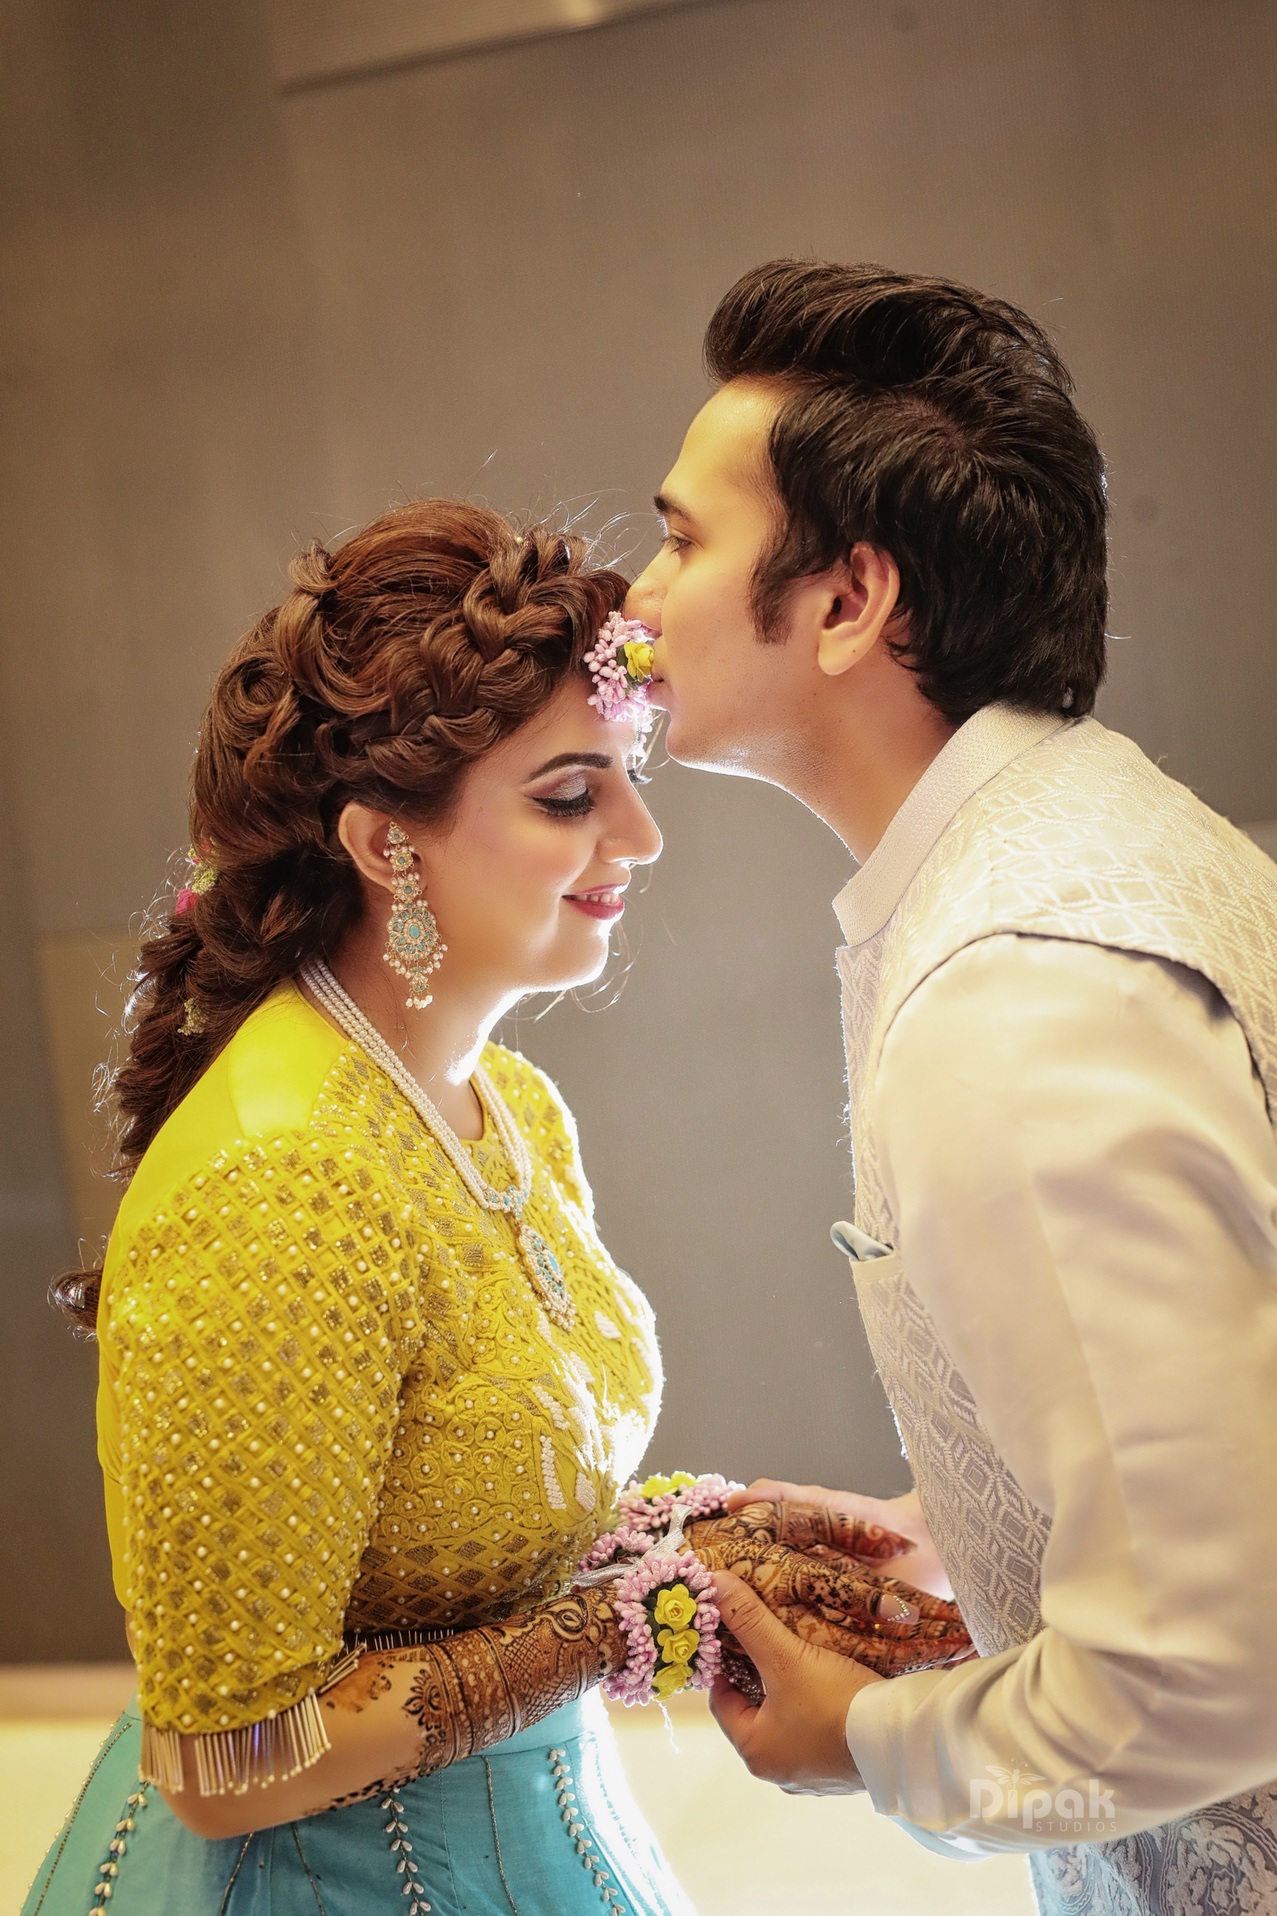 Indian wedding Couple Photography | Couples of Dipak Studios | Couples